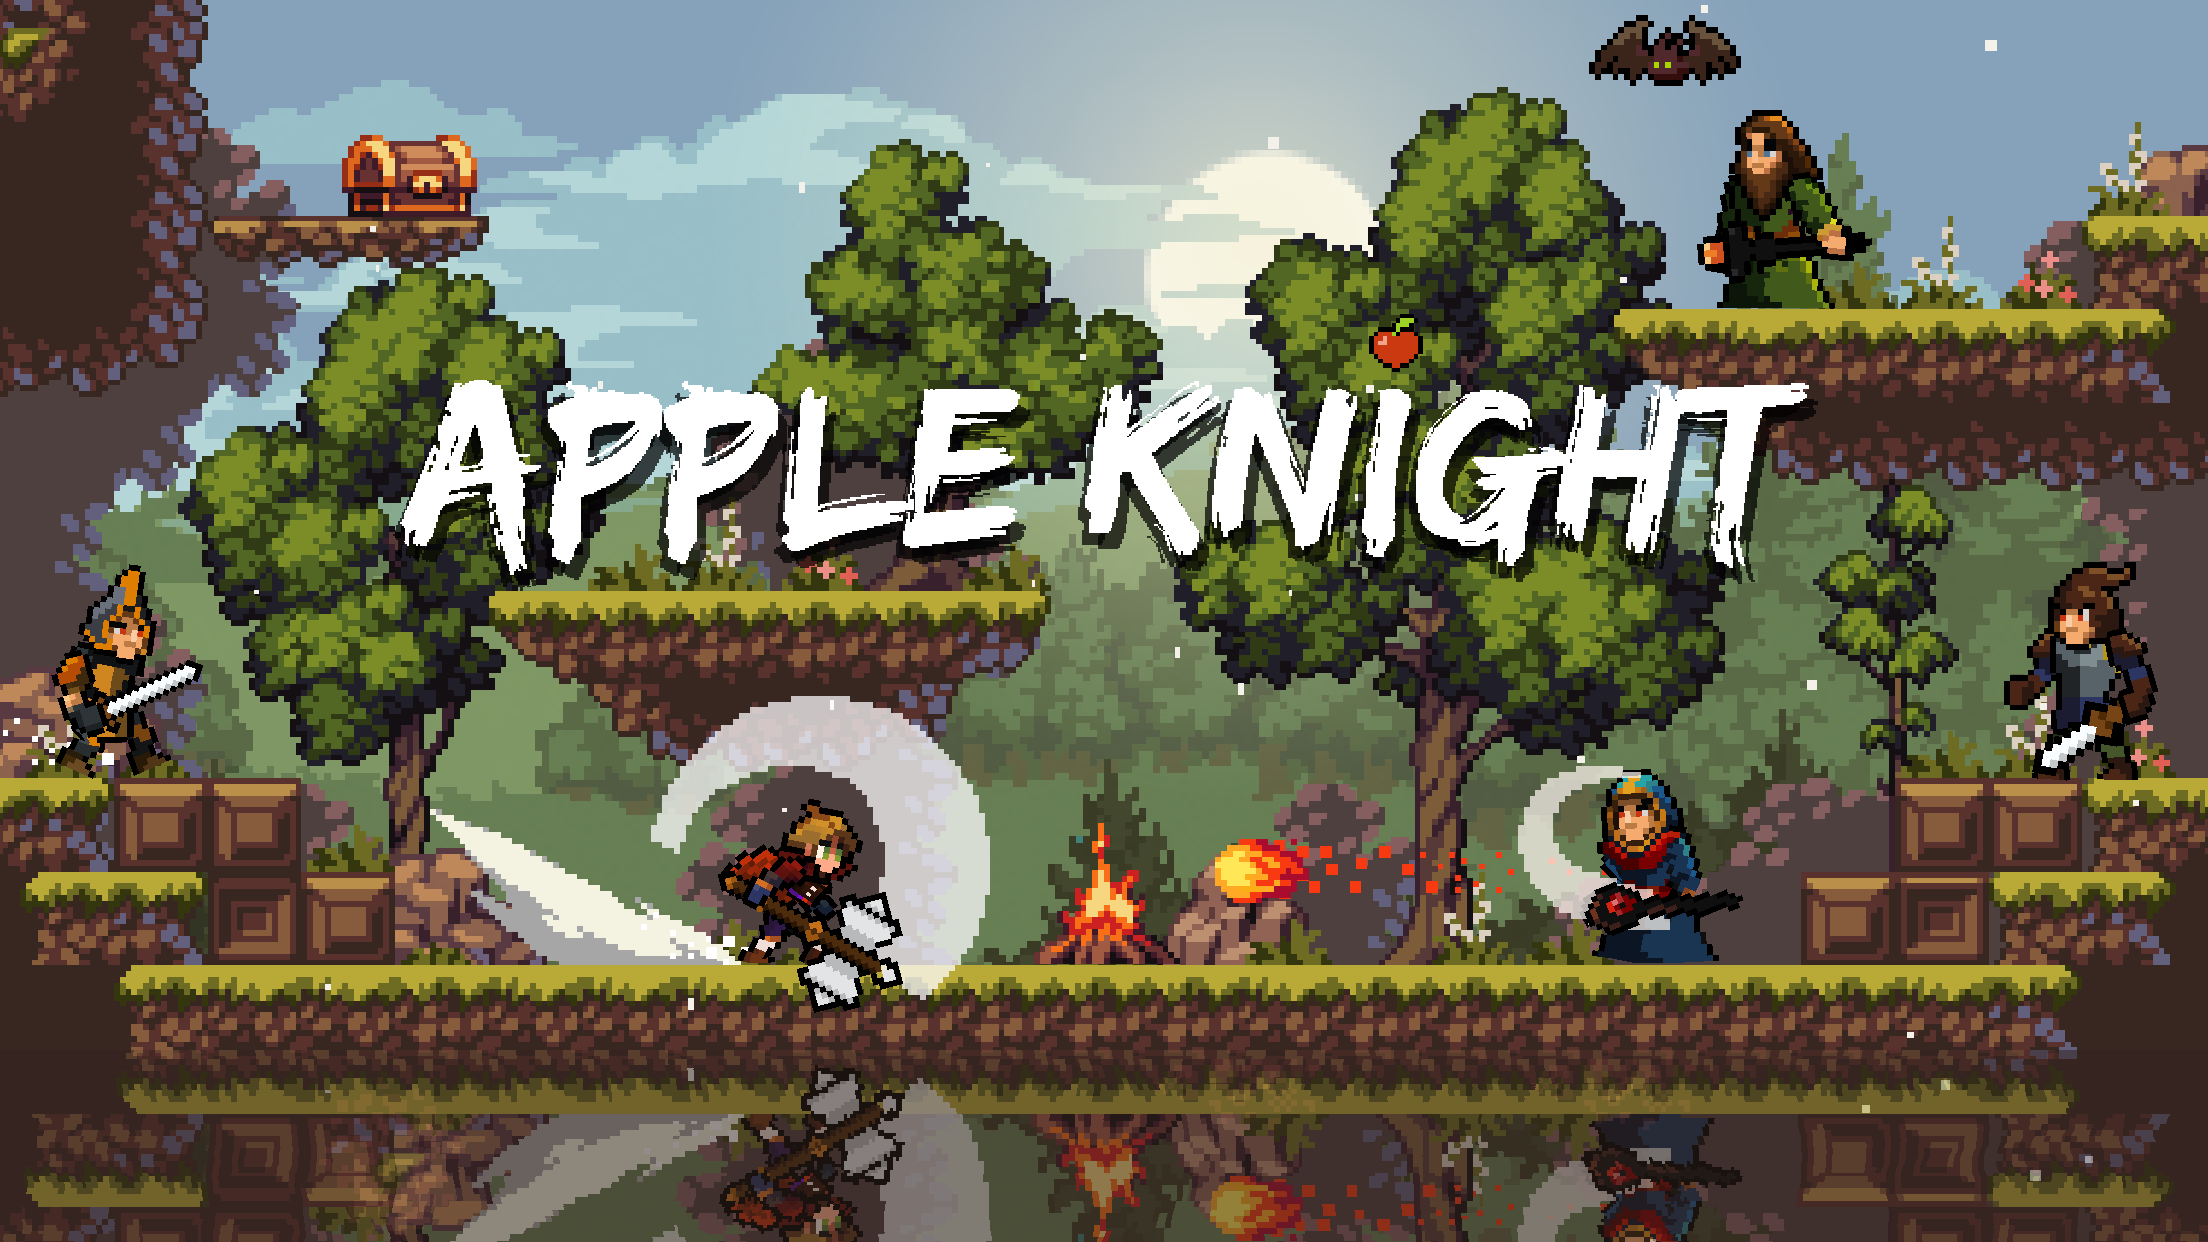 Apple Knight gameplay🍎, 4 Secret Areas🔥, Level 1 & 2 World 2